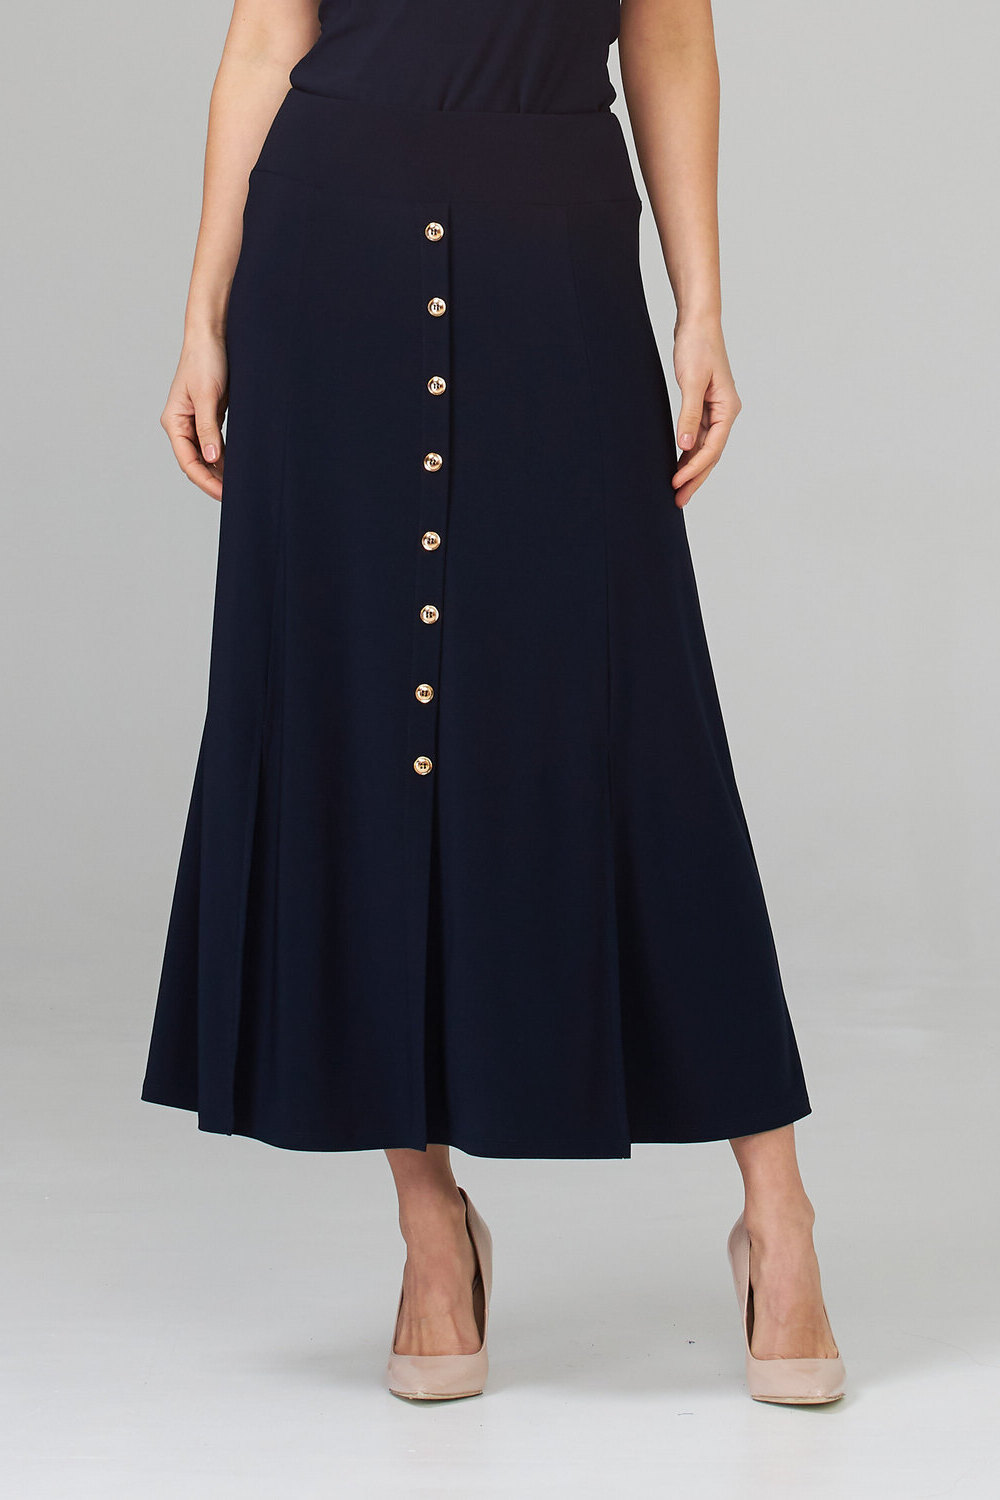 Joseph Ribkoff Skirt Style 202157. Midnight Blue